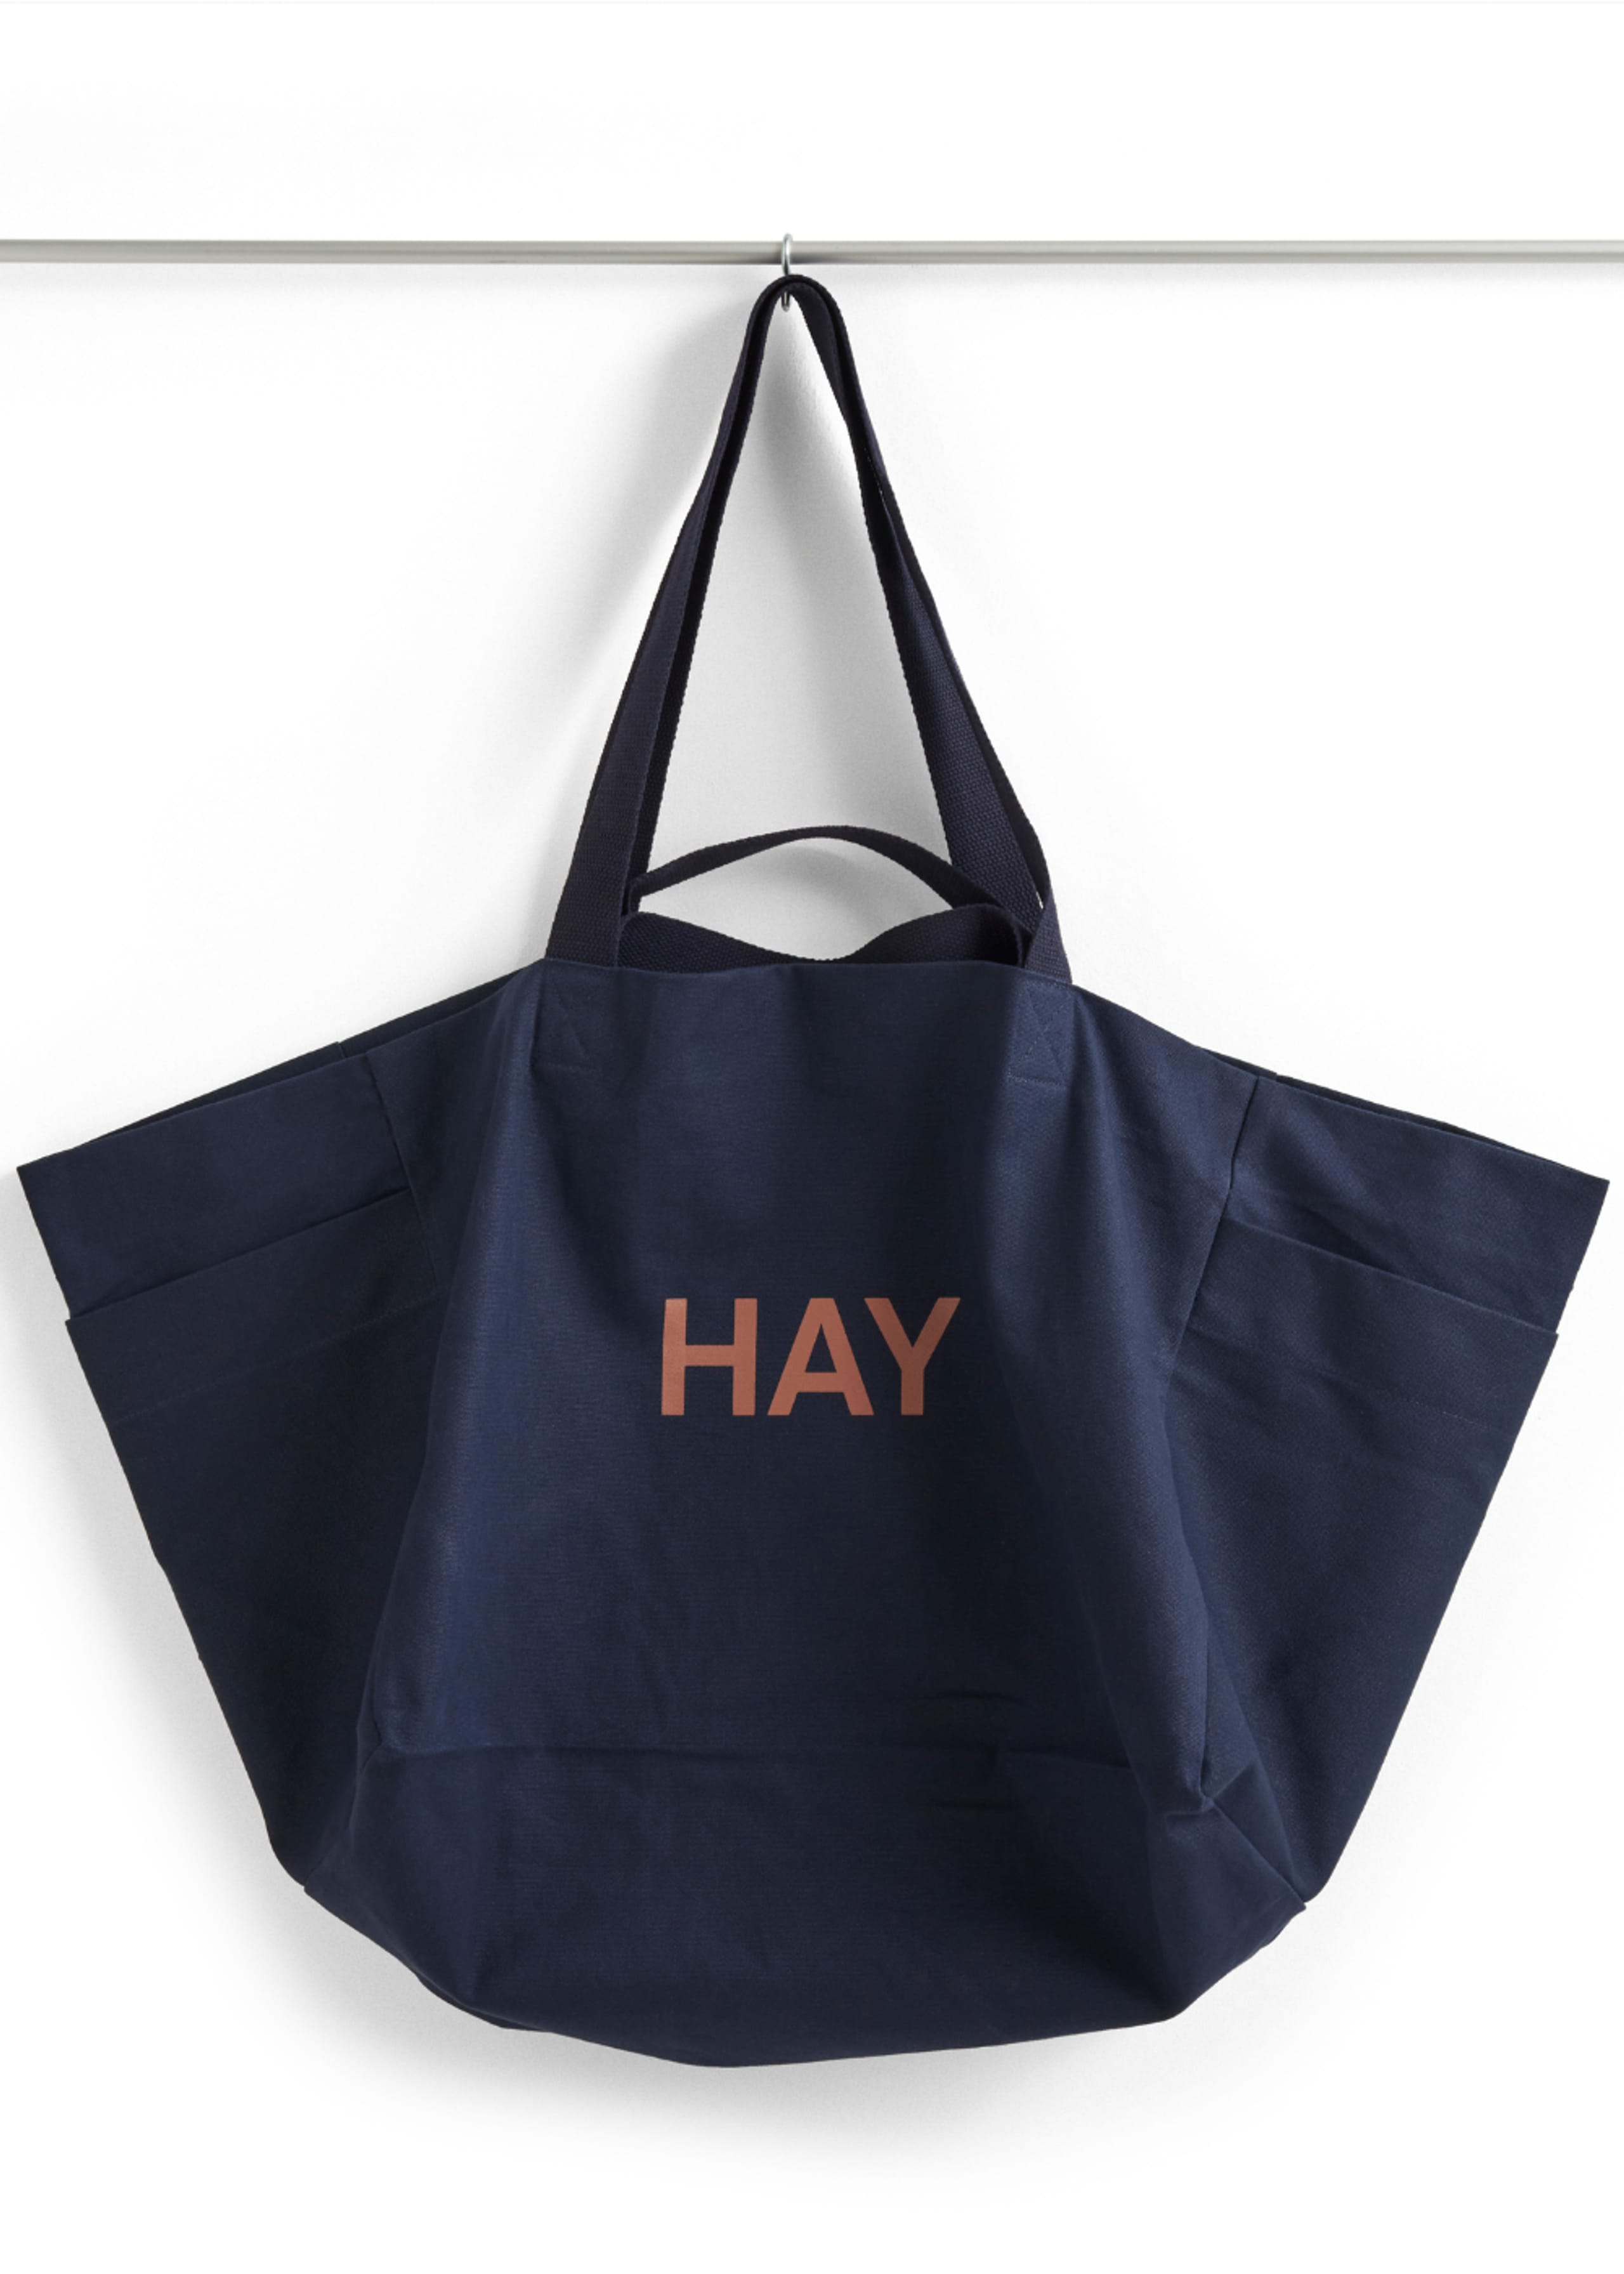 HAY - Taske - Weekend Bag No. 2 - Midnight Blue